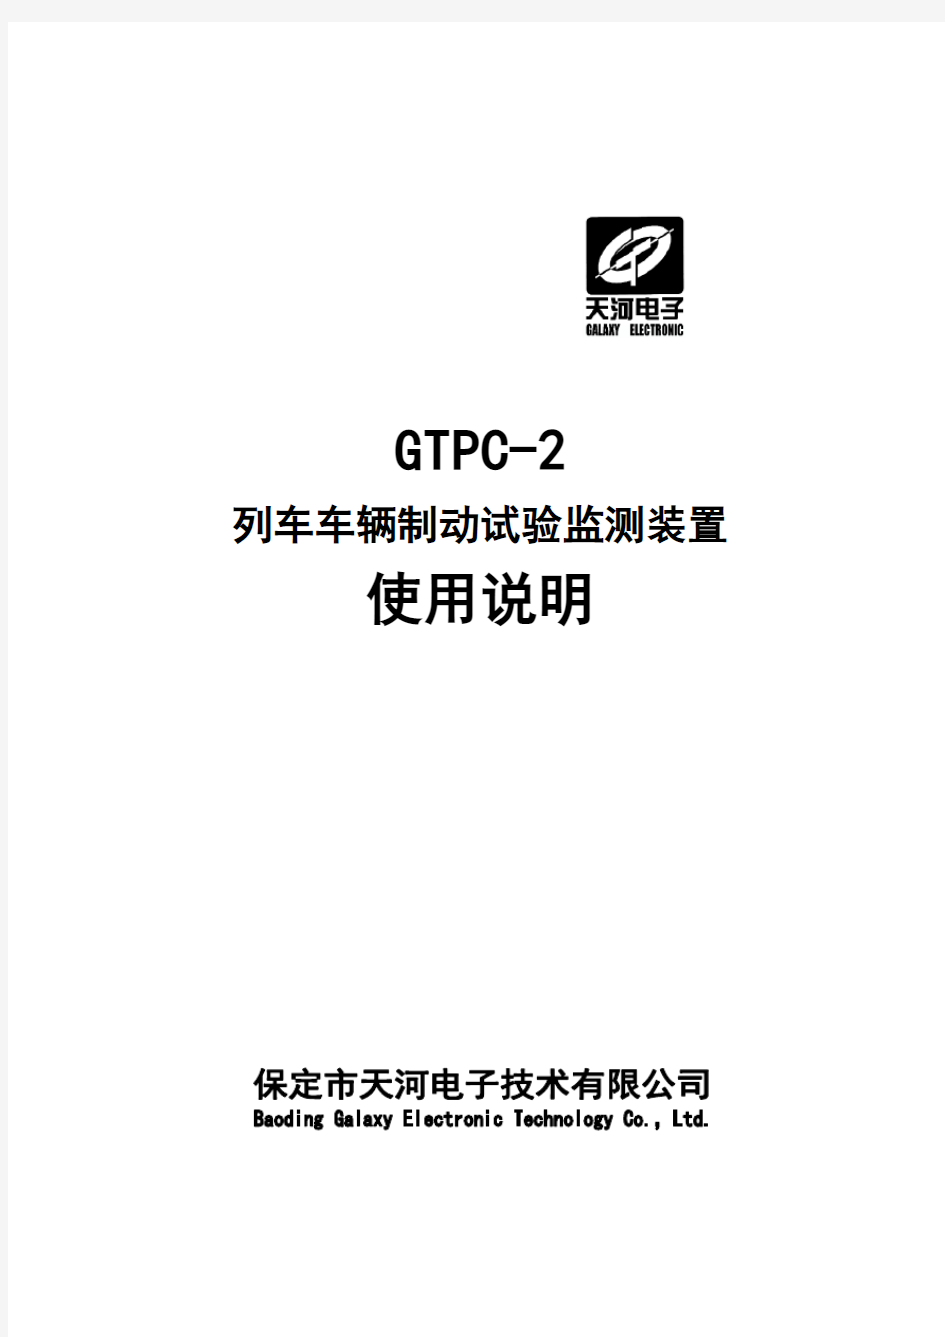 GTPC-2列车制动试验监测装置使用说明